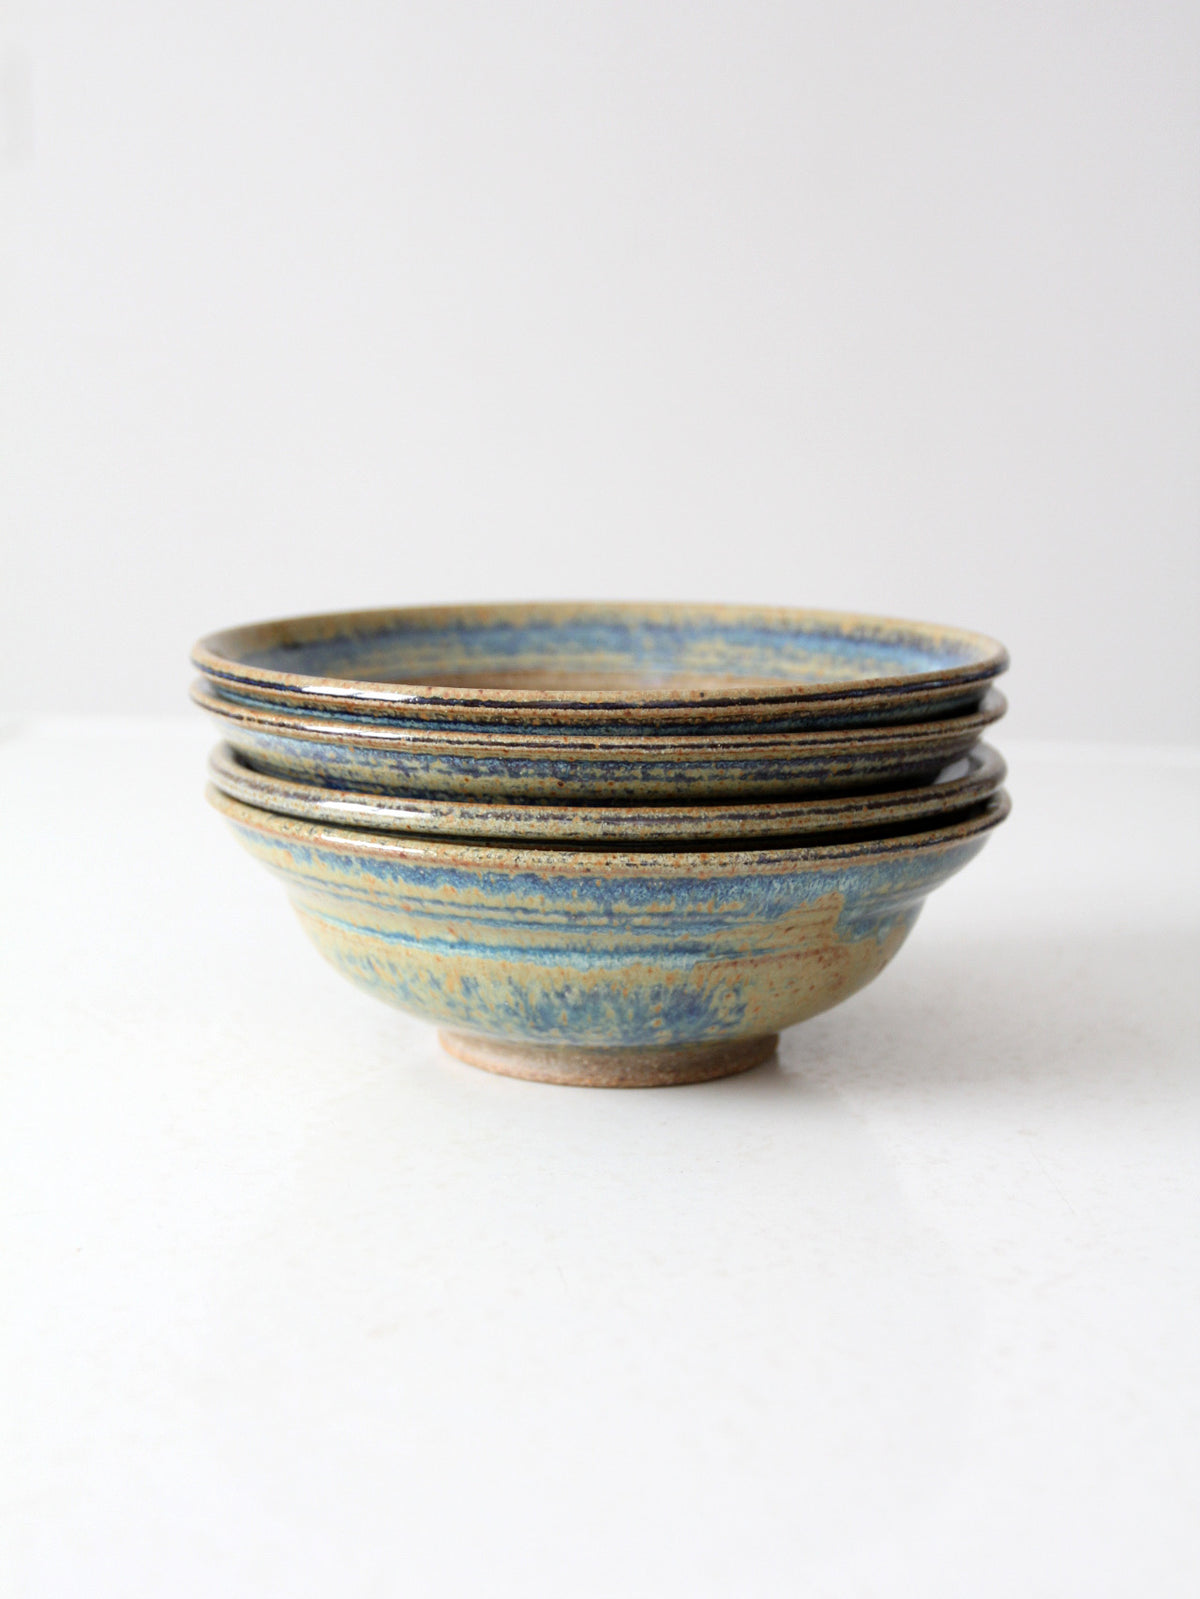 vintage studio pottery bowls set of 4